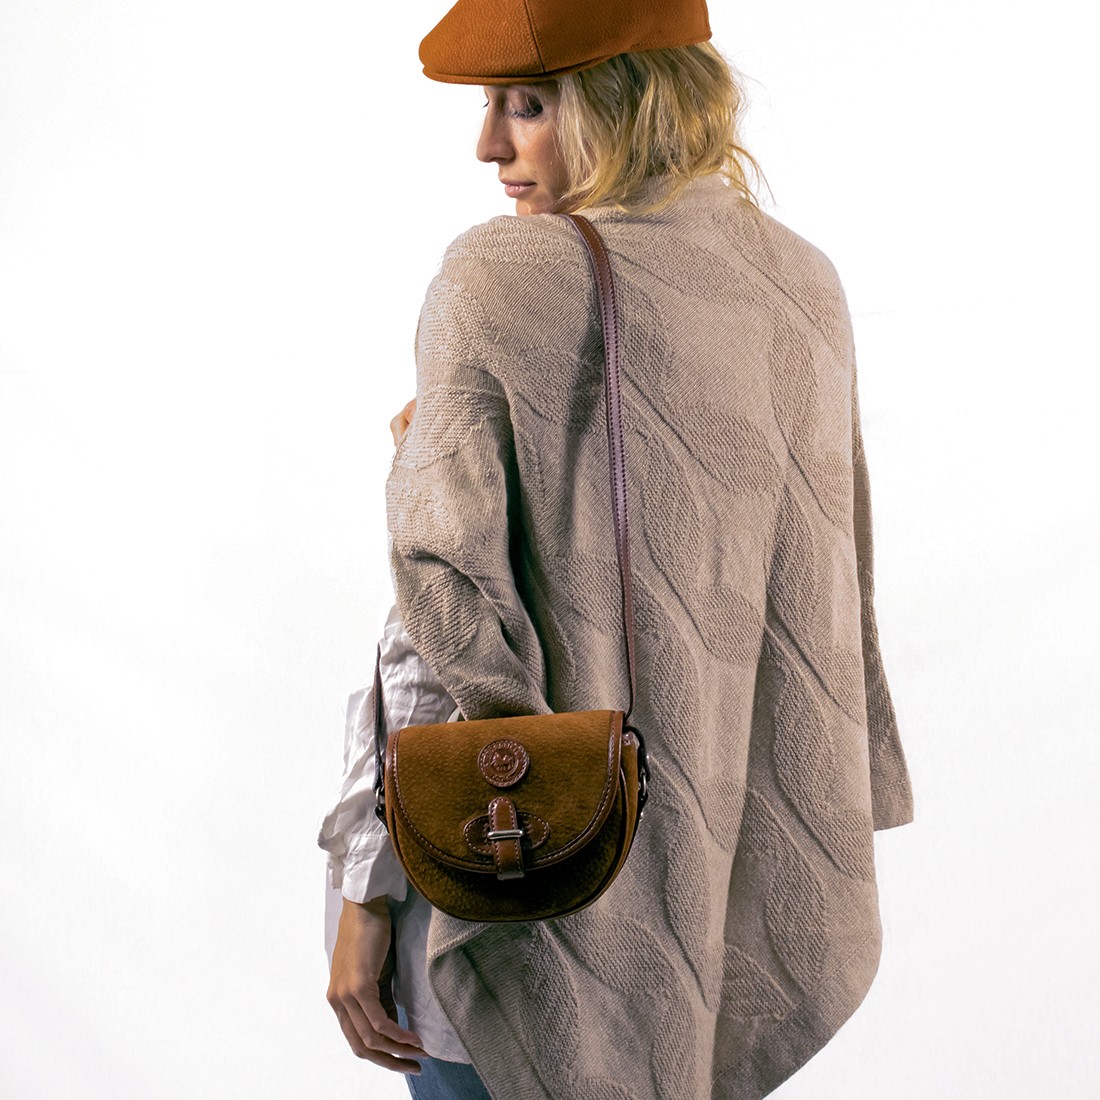 Capybara and cow leather purse with fastener |El Boyero